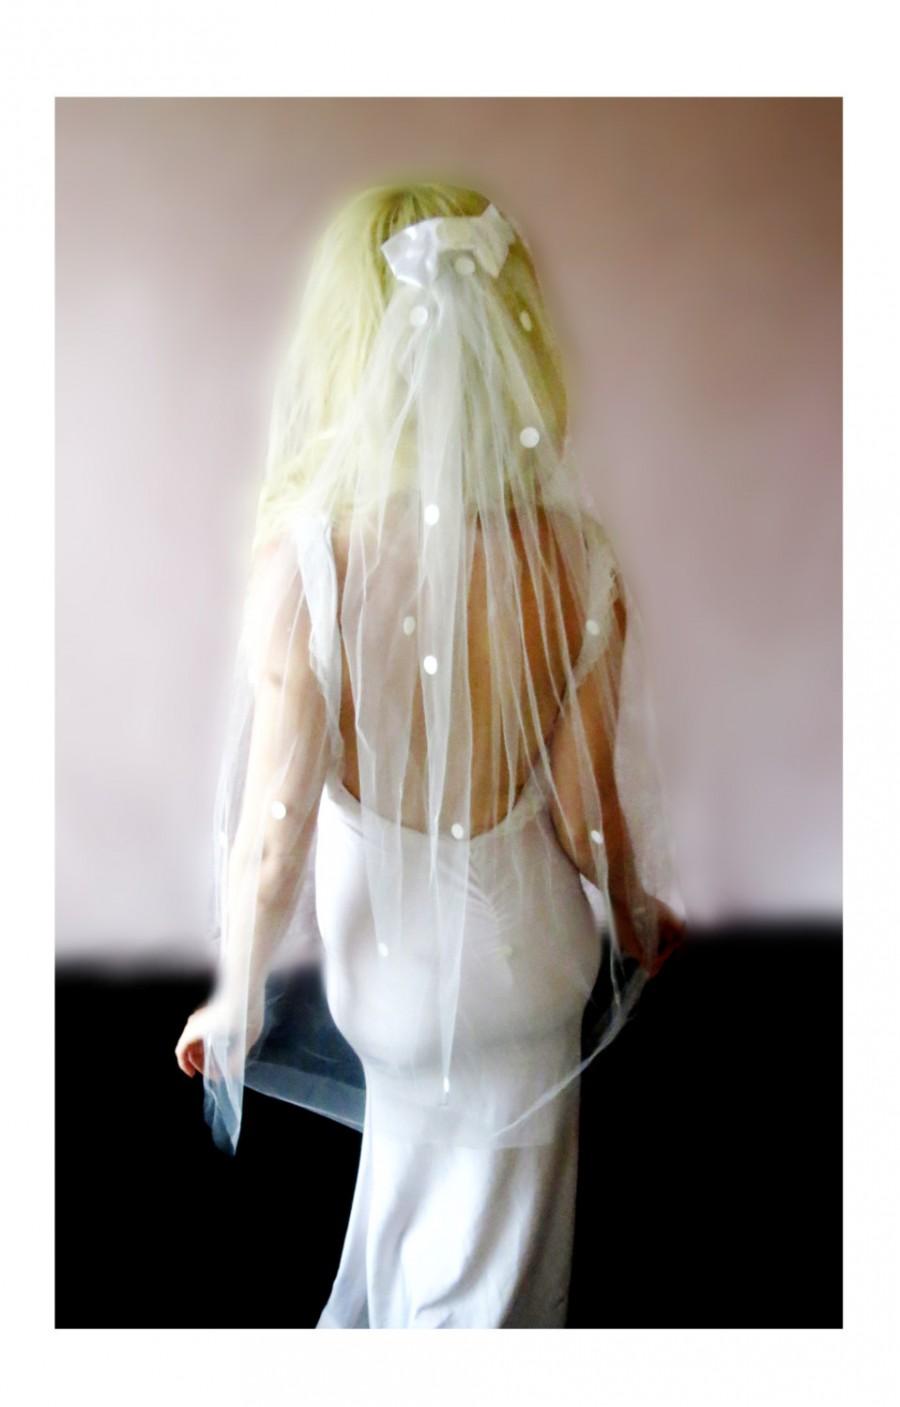 Wedding - New 2017 Collection Polka dot bow veil 1960's mod vintage inspired retro hepburn wedding bridal